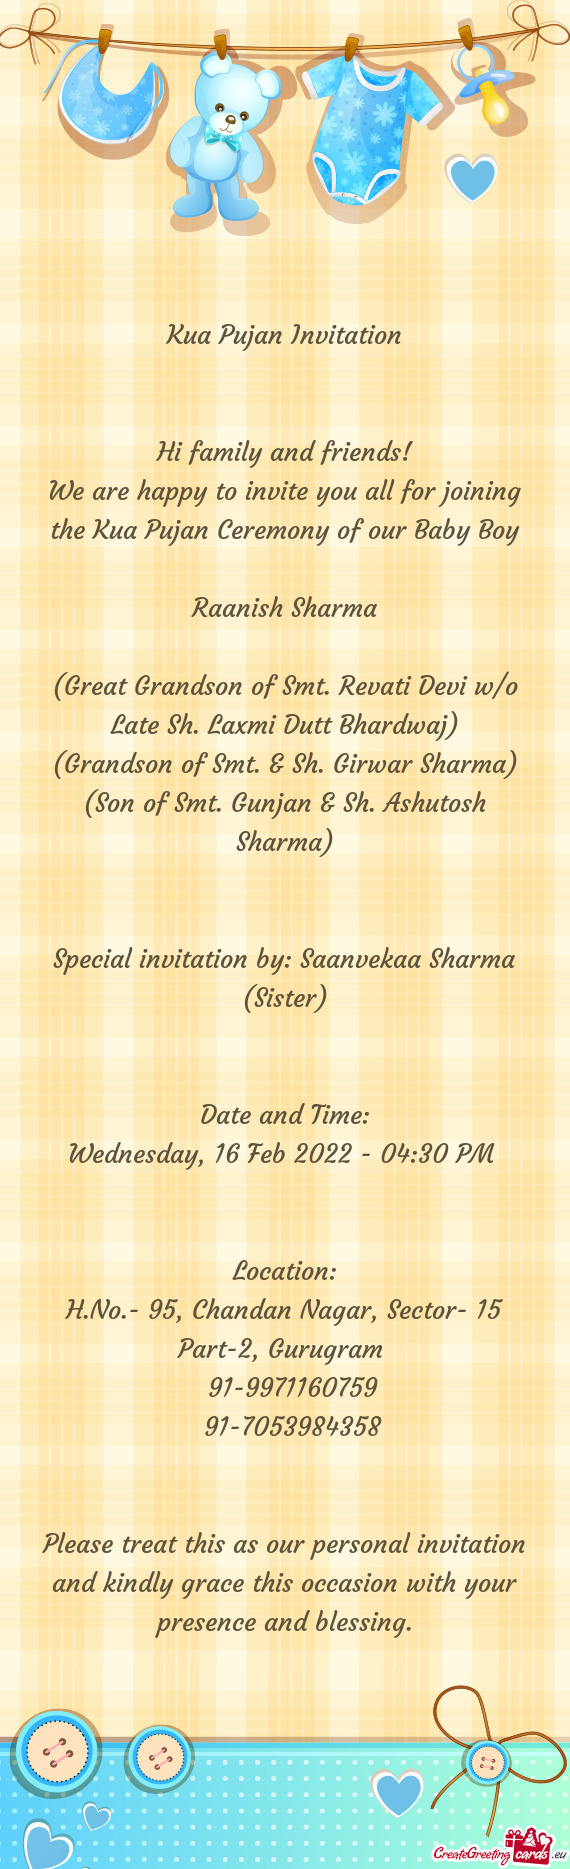 (Great Grandson of Smt. Revati Devi w/o Late Sh. Laxmi Dutt Bhardwaj)